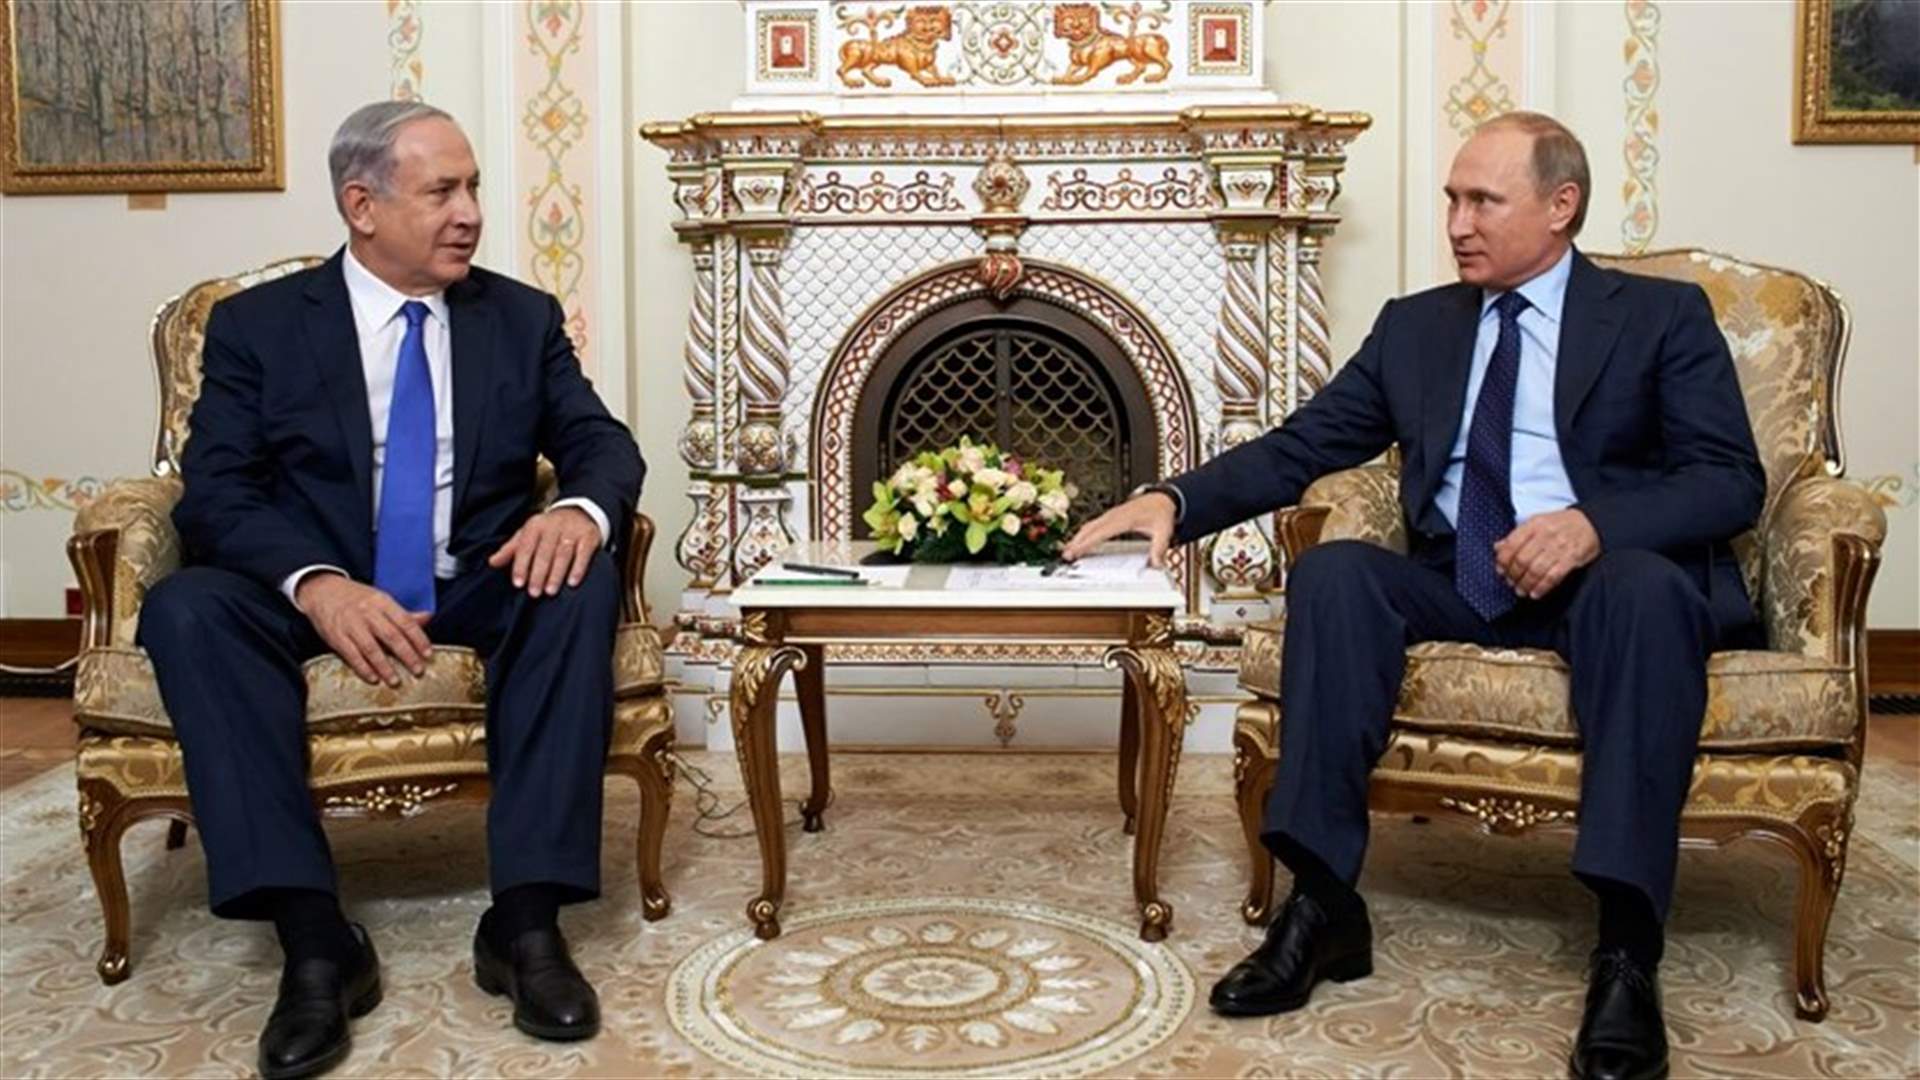 Putin, Netanyahu discuss cooperation against Middle East terrorism -agencies   